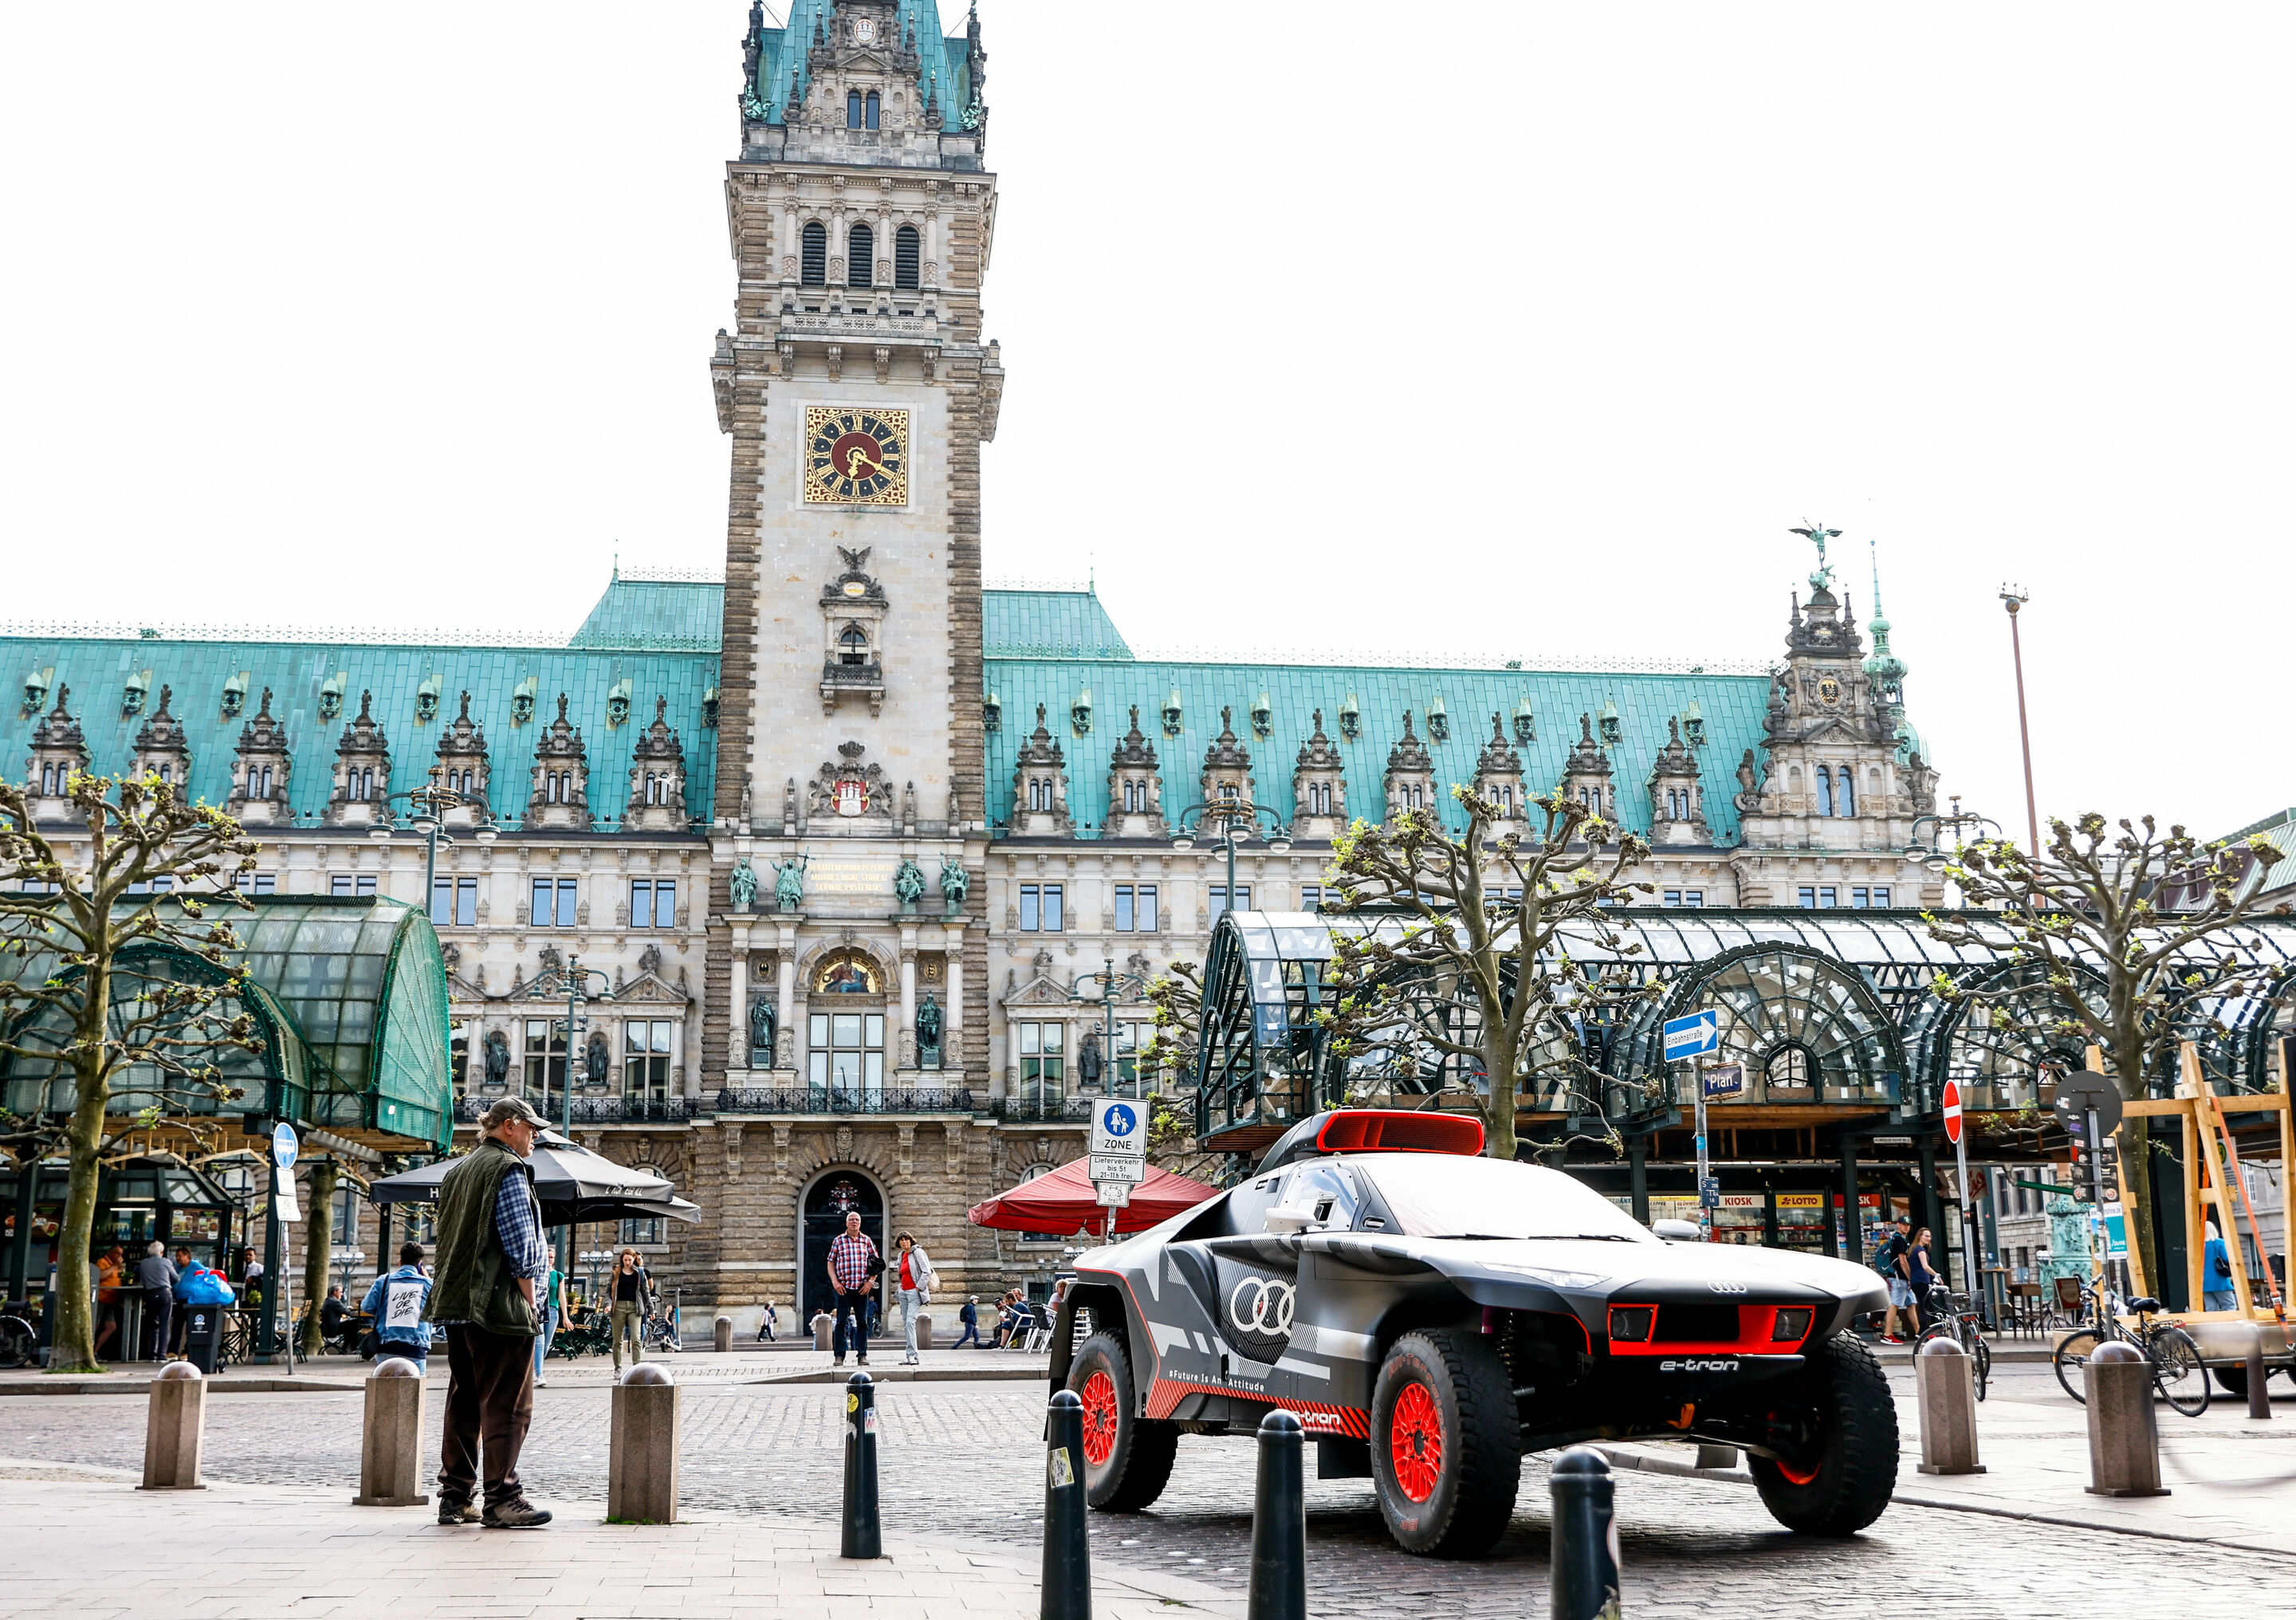 Audi RS Q e-tron on tour, Hamburg